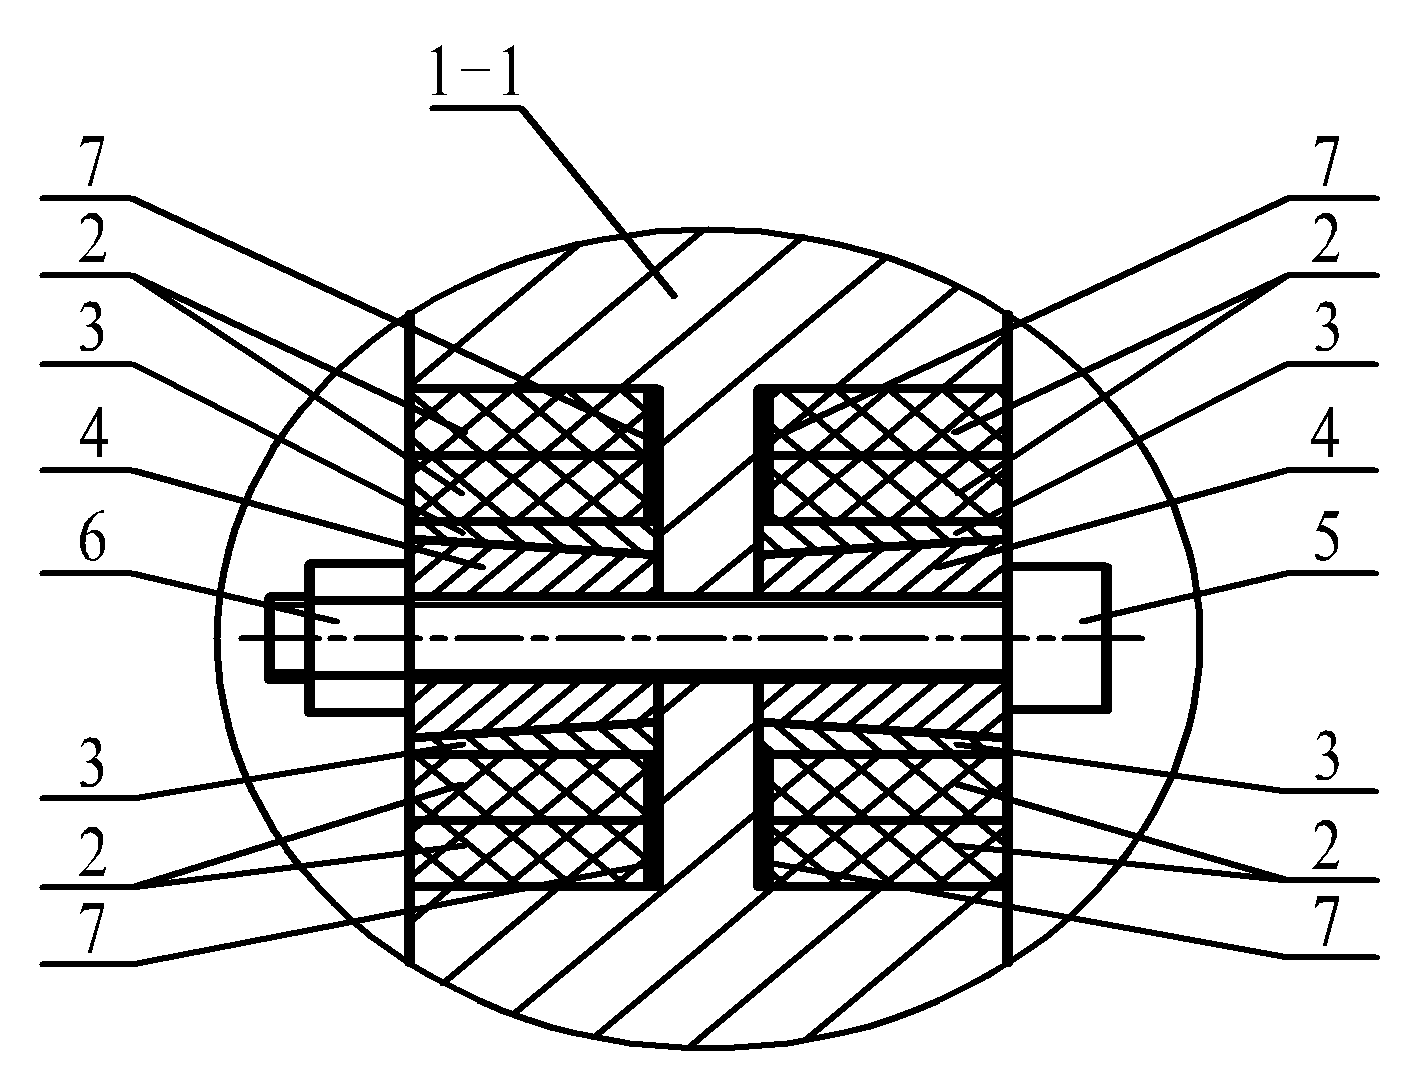 Sandwich-type rectangular quadruped linear ultrasonic motor vibrator with wedge preload